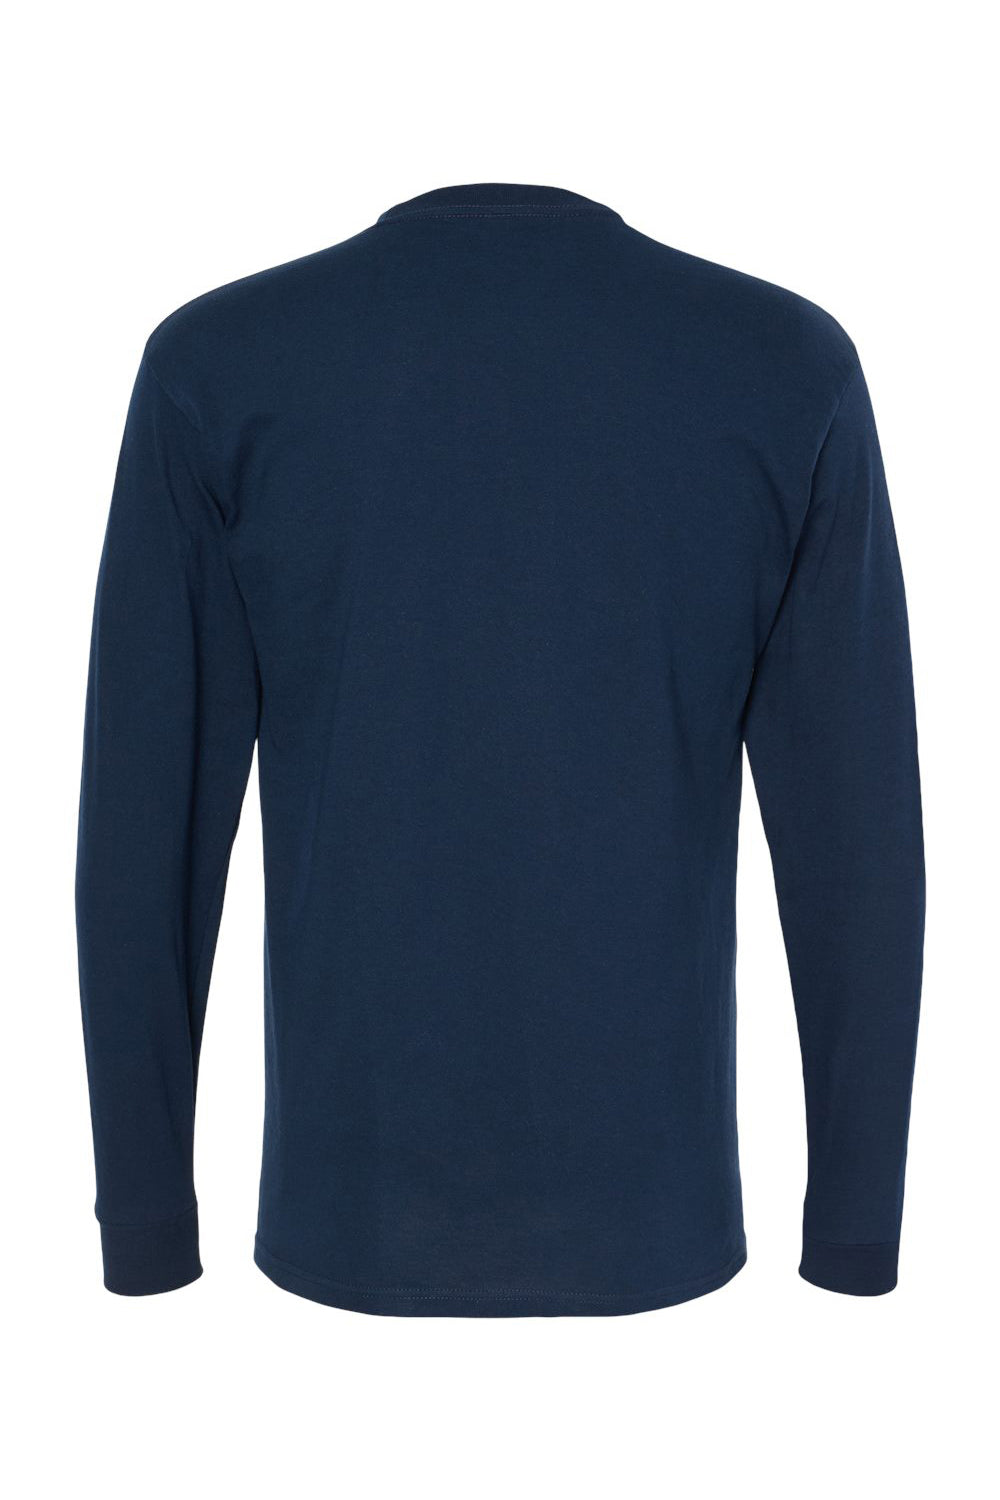 M&O 4820 Mens Gold Soft Touch Long Sleeve Crewneck T-Shirt Deep Navy Blue Flat Back